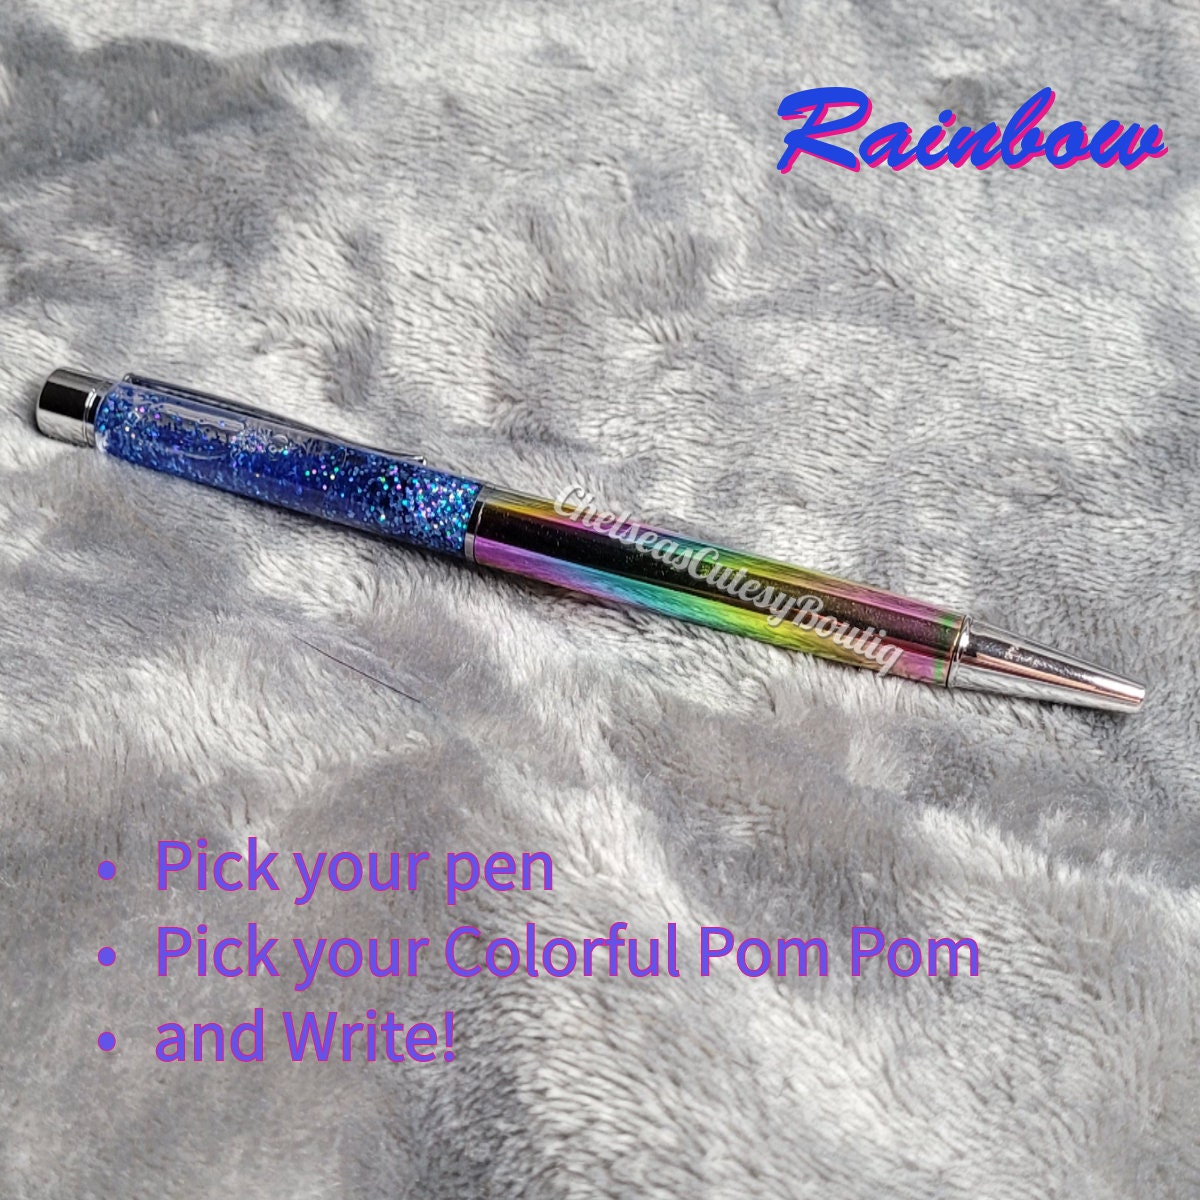 HMIEPRS 10PCS Rainbow Pens, Cute Fluffy Monster Pens Fun Pens for Kids  Novelty Pens Pom Pom Pen for Office School Supply Birthday Christmas  Carnival